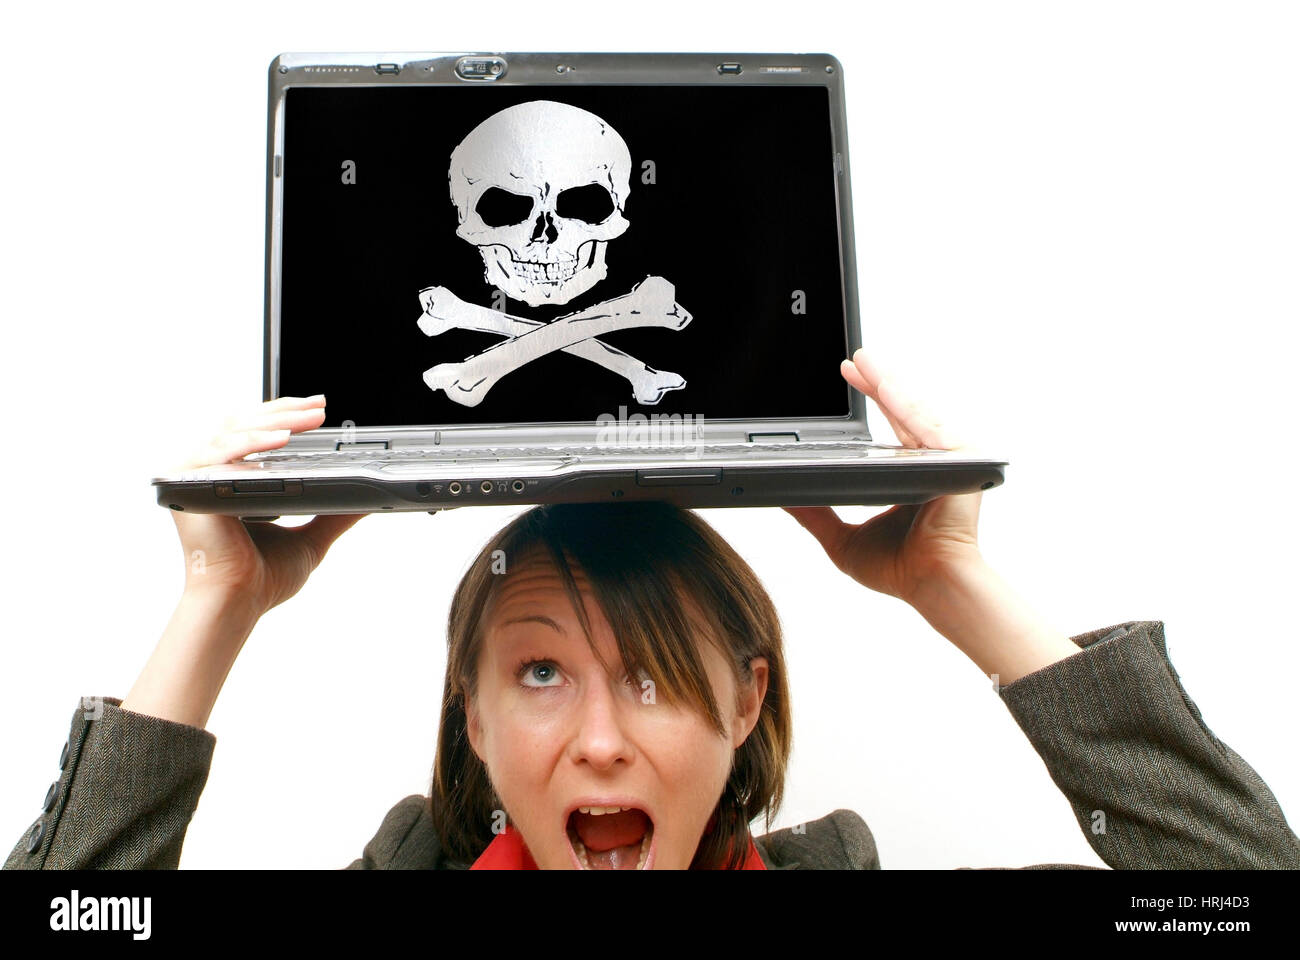 Gesch?ftsfrau mit Laptop am Kopf, Symbolbild Totenkopf, Gefahr - business woman with laptop on head, symbolic death's head Stock Photo